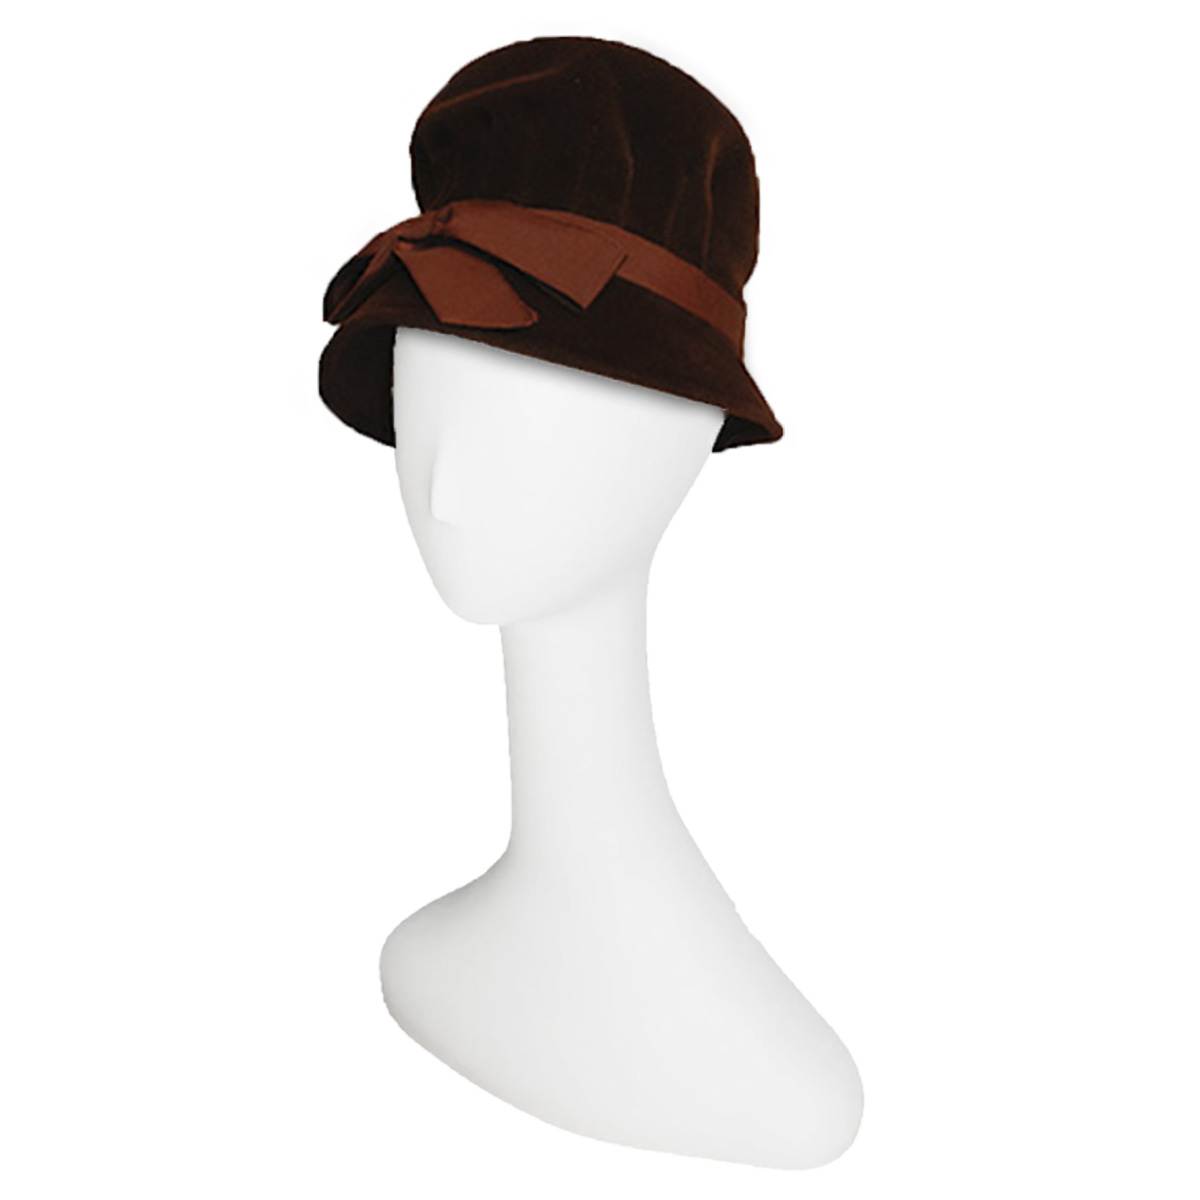 vintage 1940s tall hat